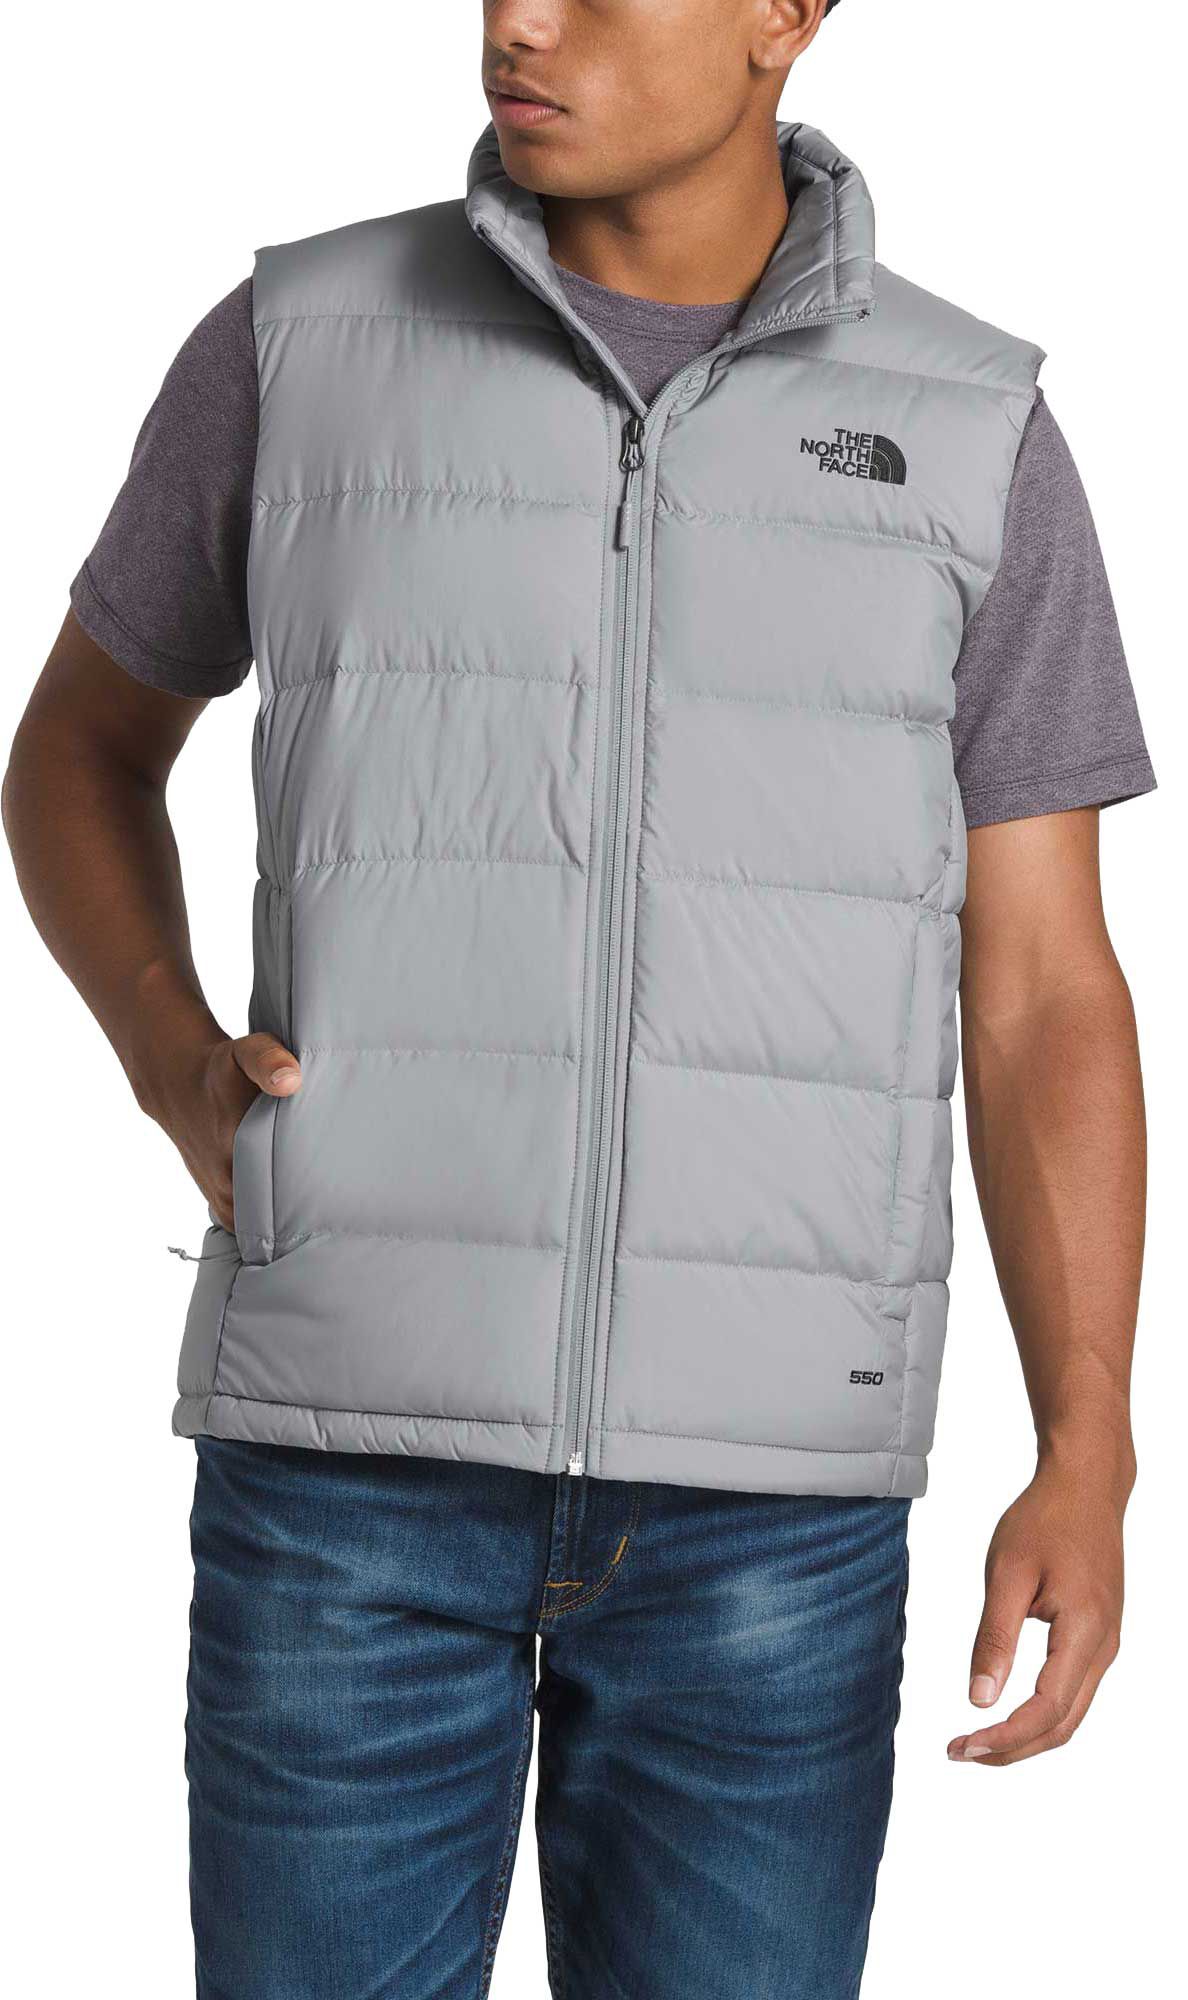 the north face men's vests on sale